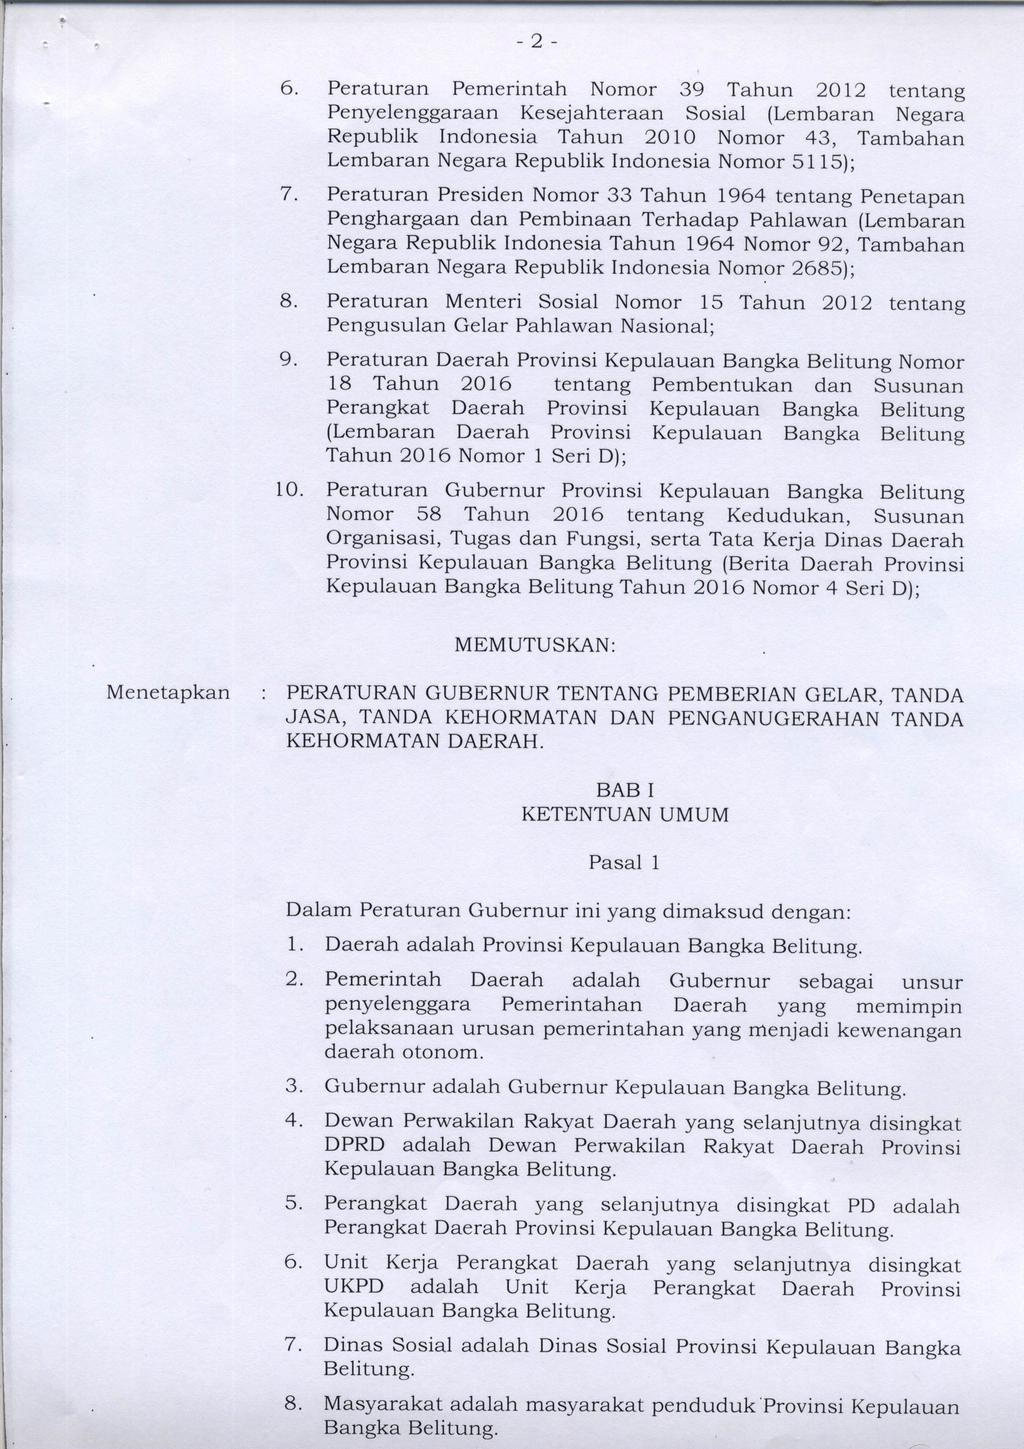 6. Peraturan Pemerintah Nomor 39 Tahun 2012 tentang Penyelenggaraan Kesejahteraan Sosial (Lembaran Negara Republik Indonesia Tahun 2010 Nomor 43, Tambahan Lembaran Negara Republik Indonesia Nomor